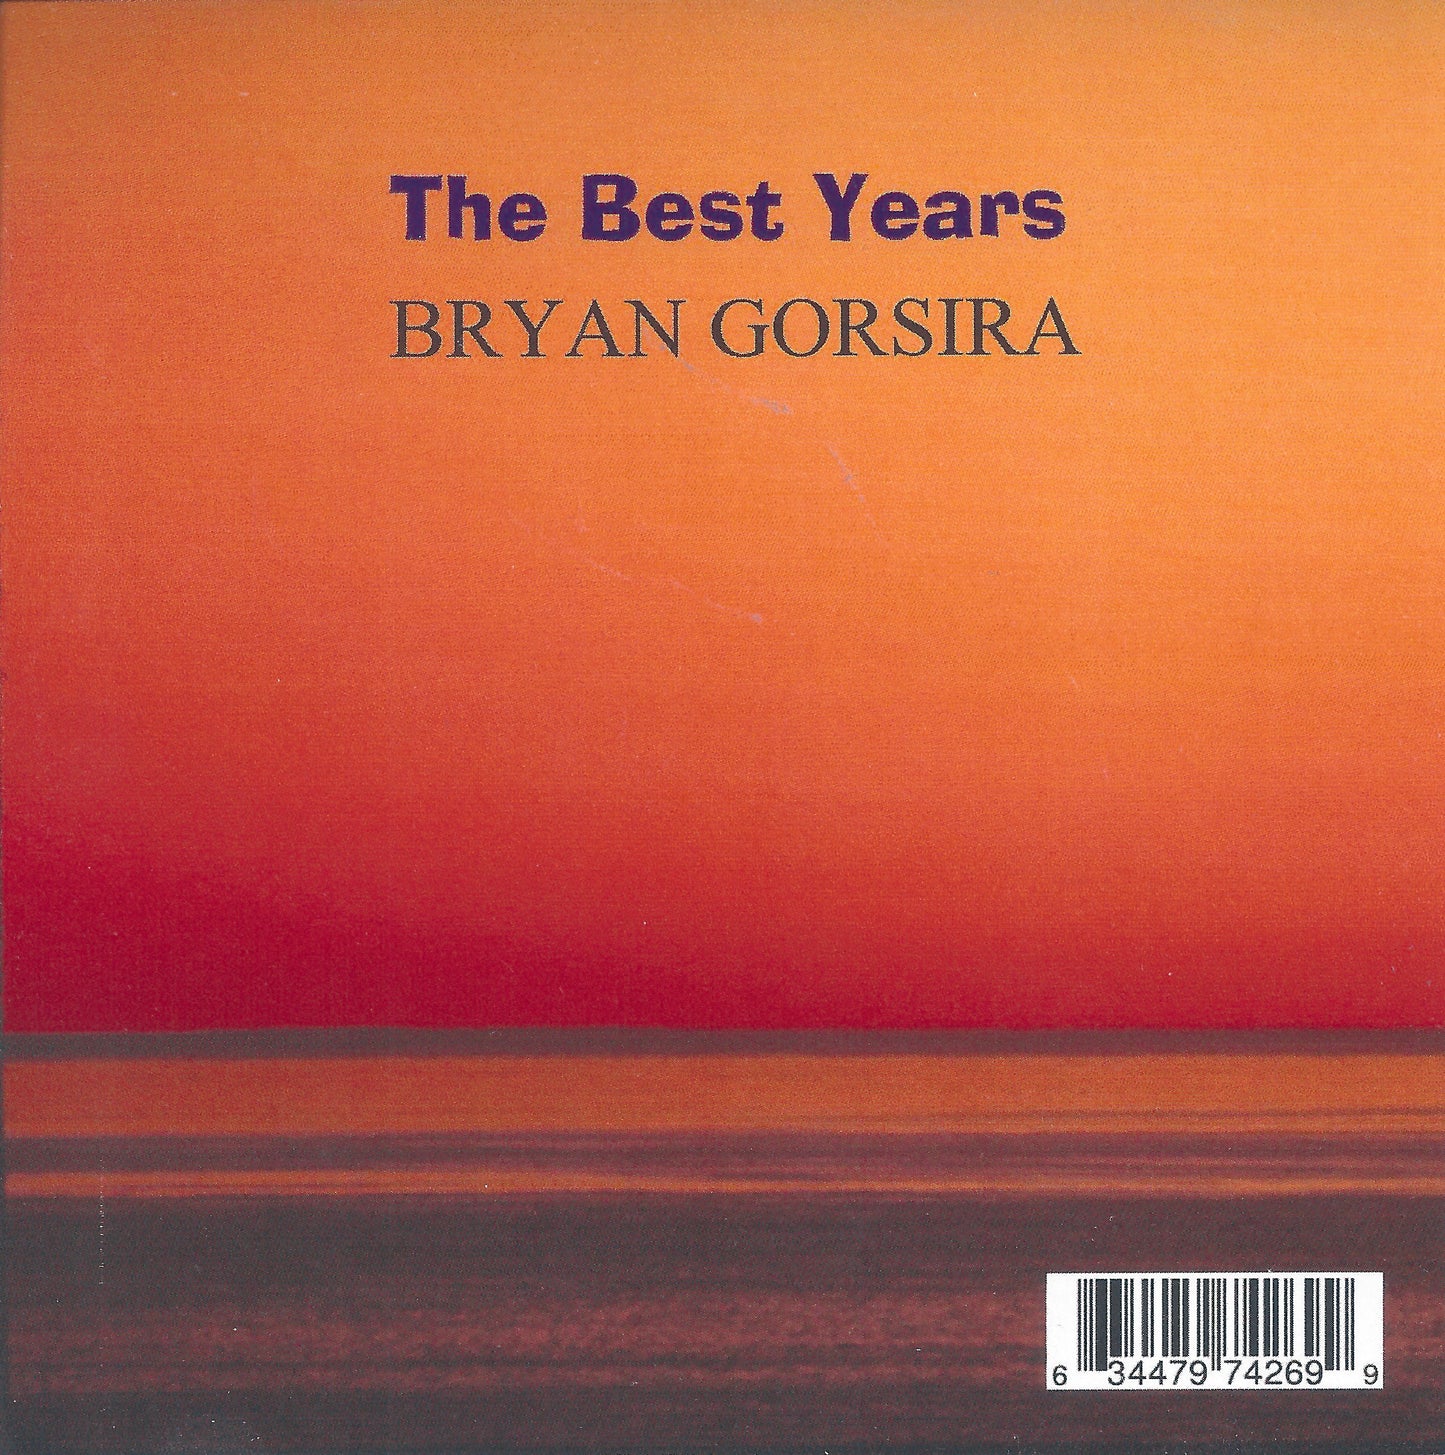 Give Me A Day - Bryan Gorsira